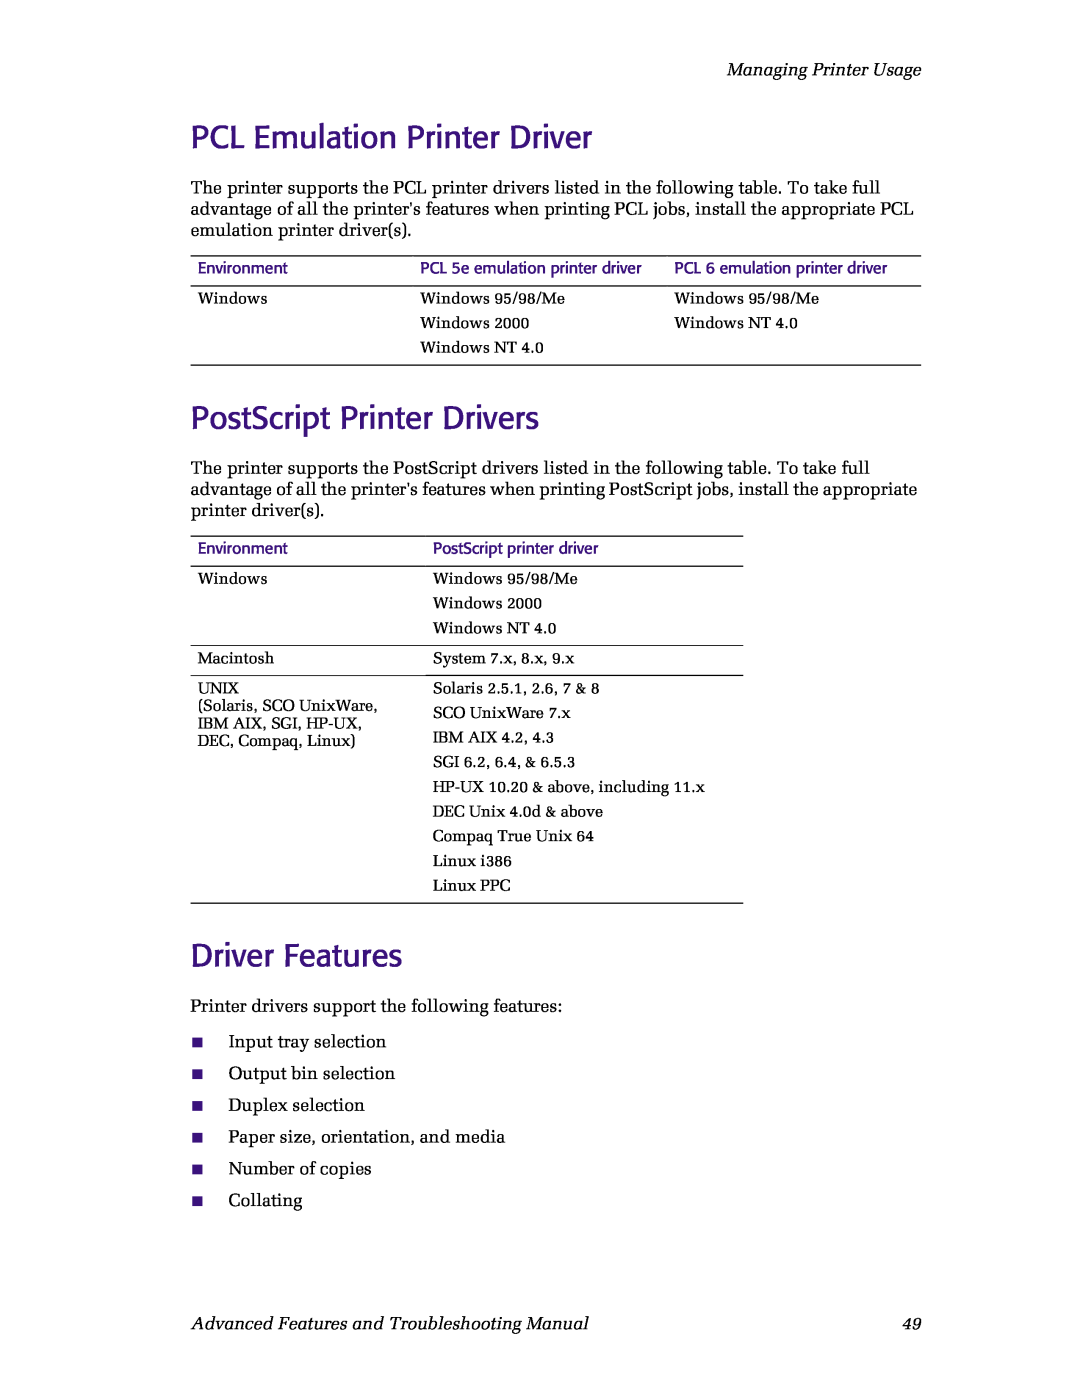 Xerox N4525 manual PCL Emulation Printer Driver, PostScript Printer Drivers, Driver Features, Managing Printer Usage 